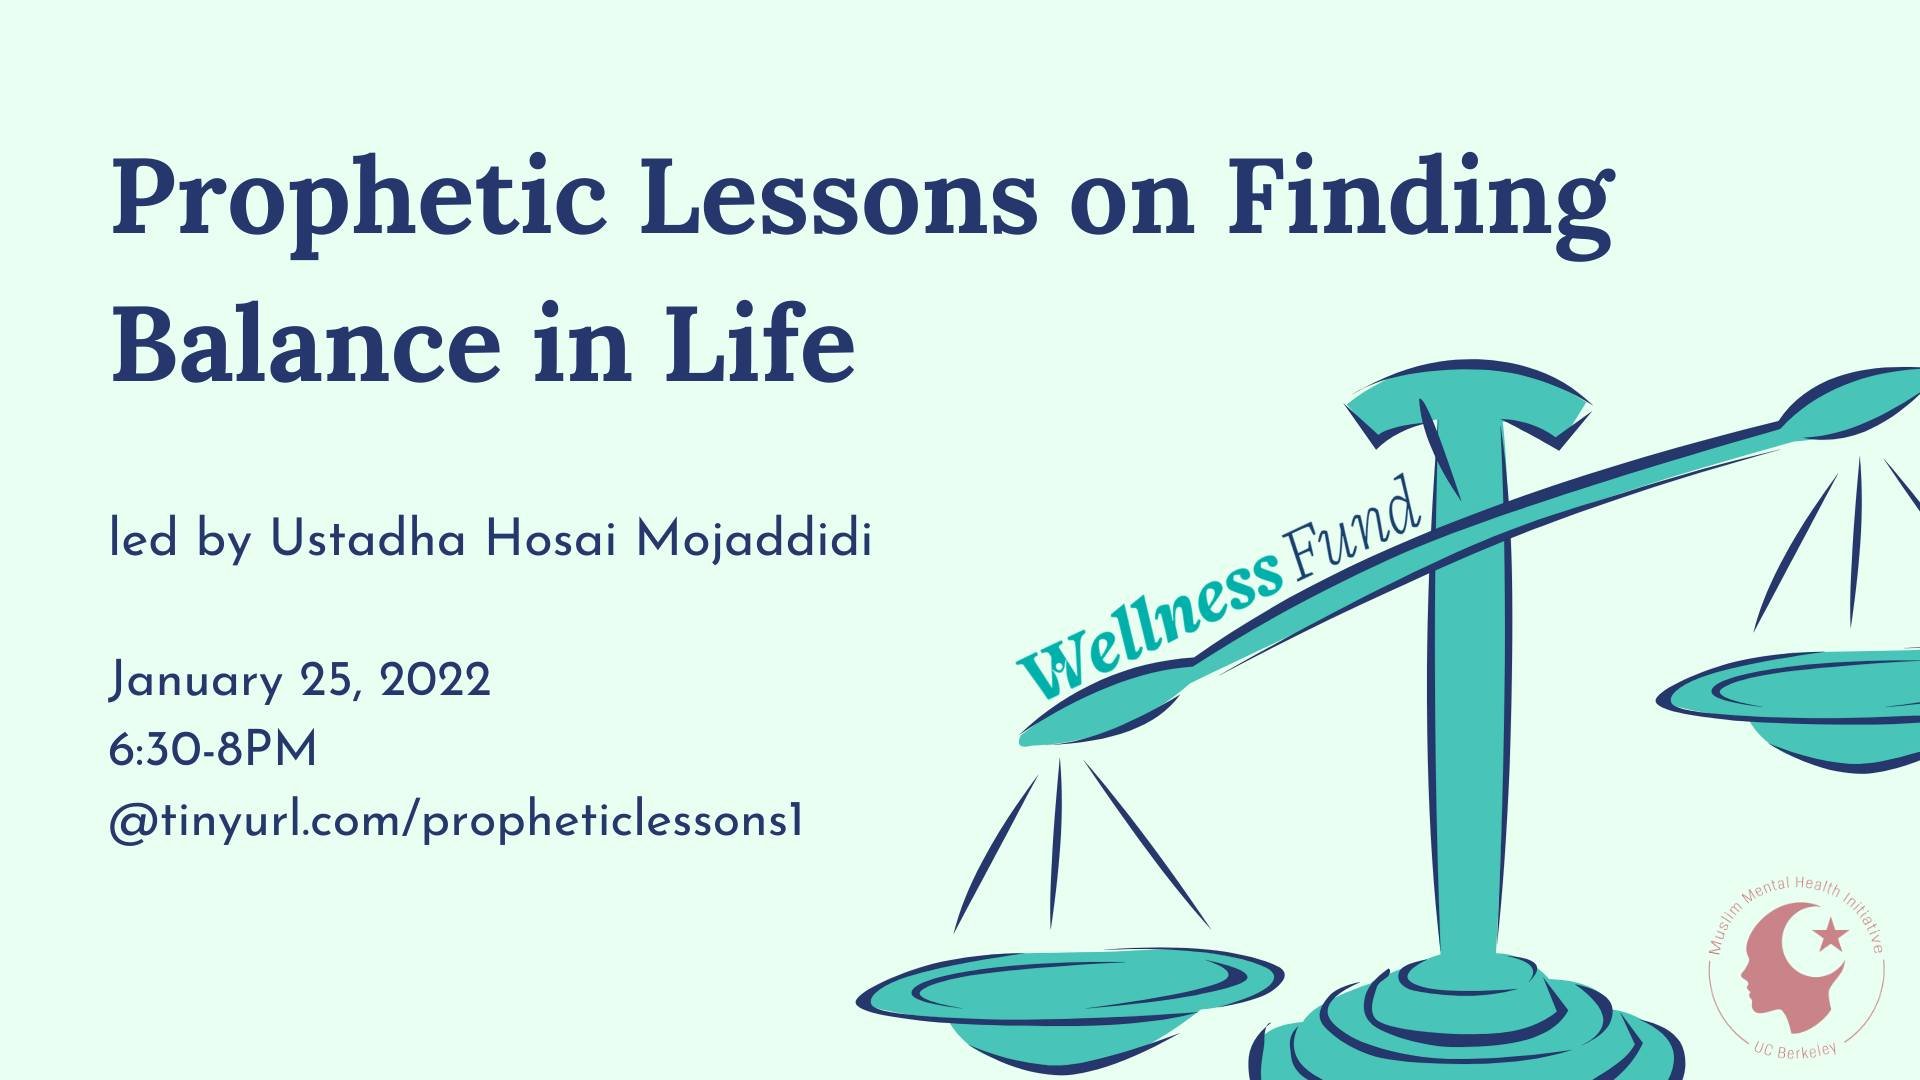 01/25/22 Prophetic Lessons on Finding Balance in Life - Ustadha Hosai Mojaddidi